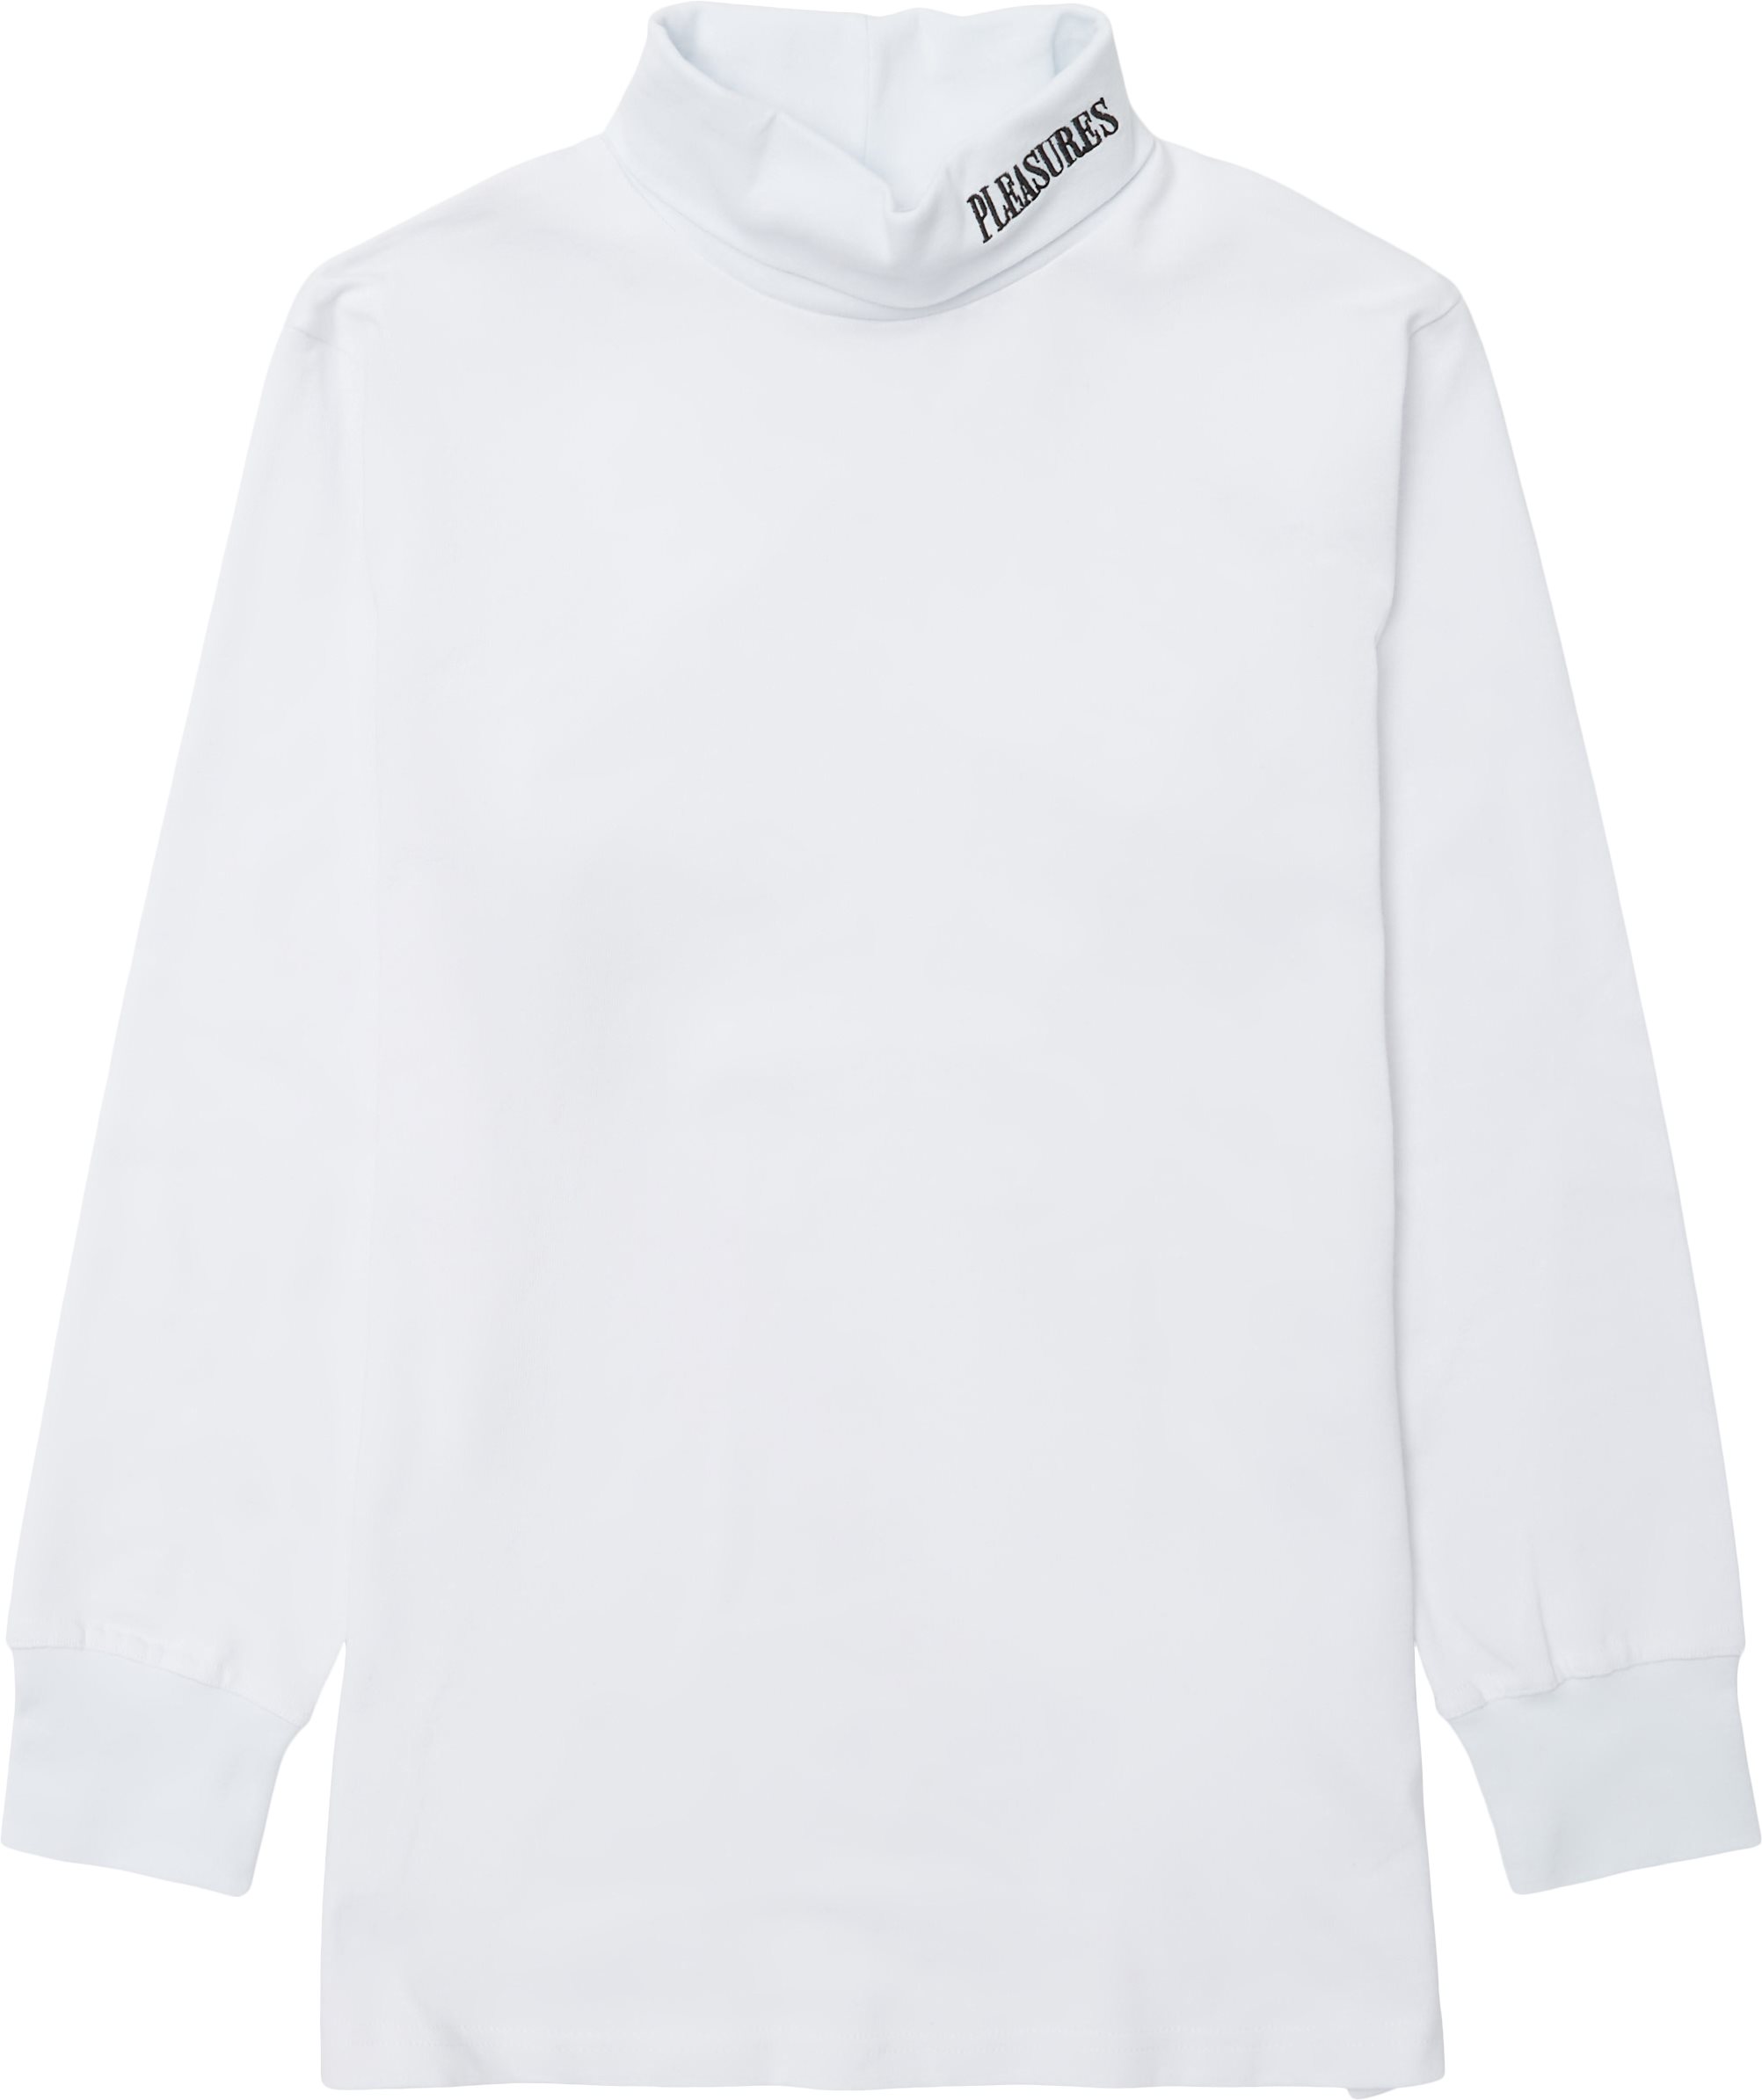 Cut Here Turtleneck  - T-shirts - Regular fit - White